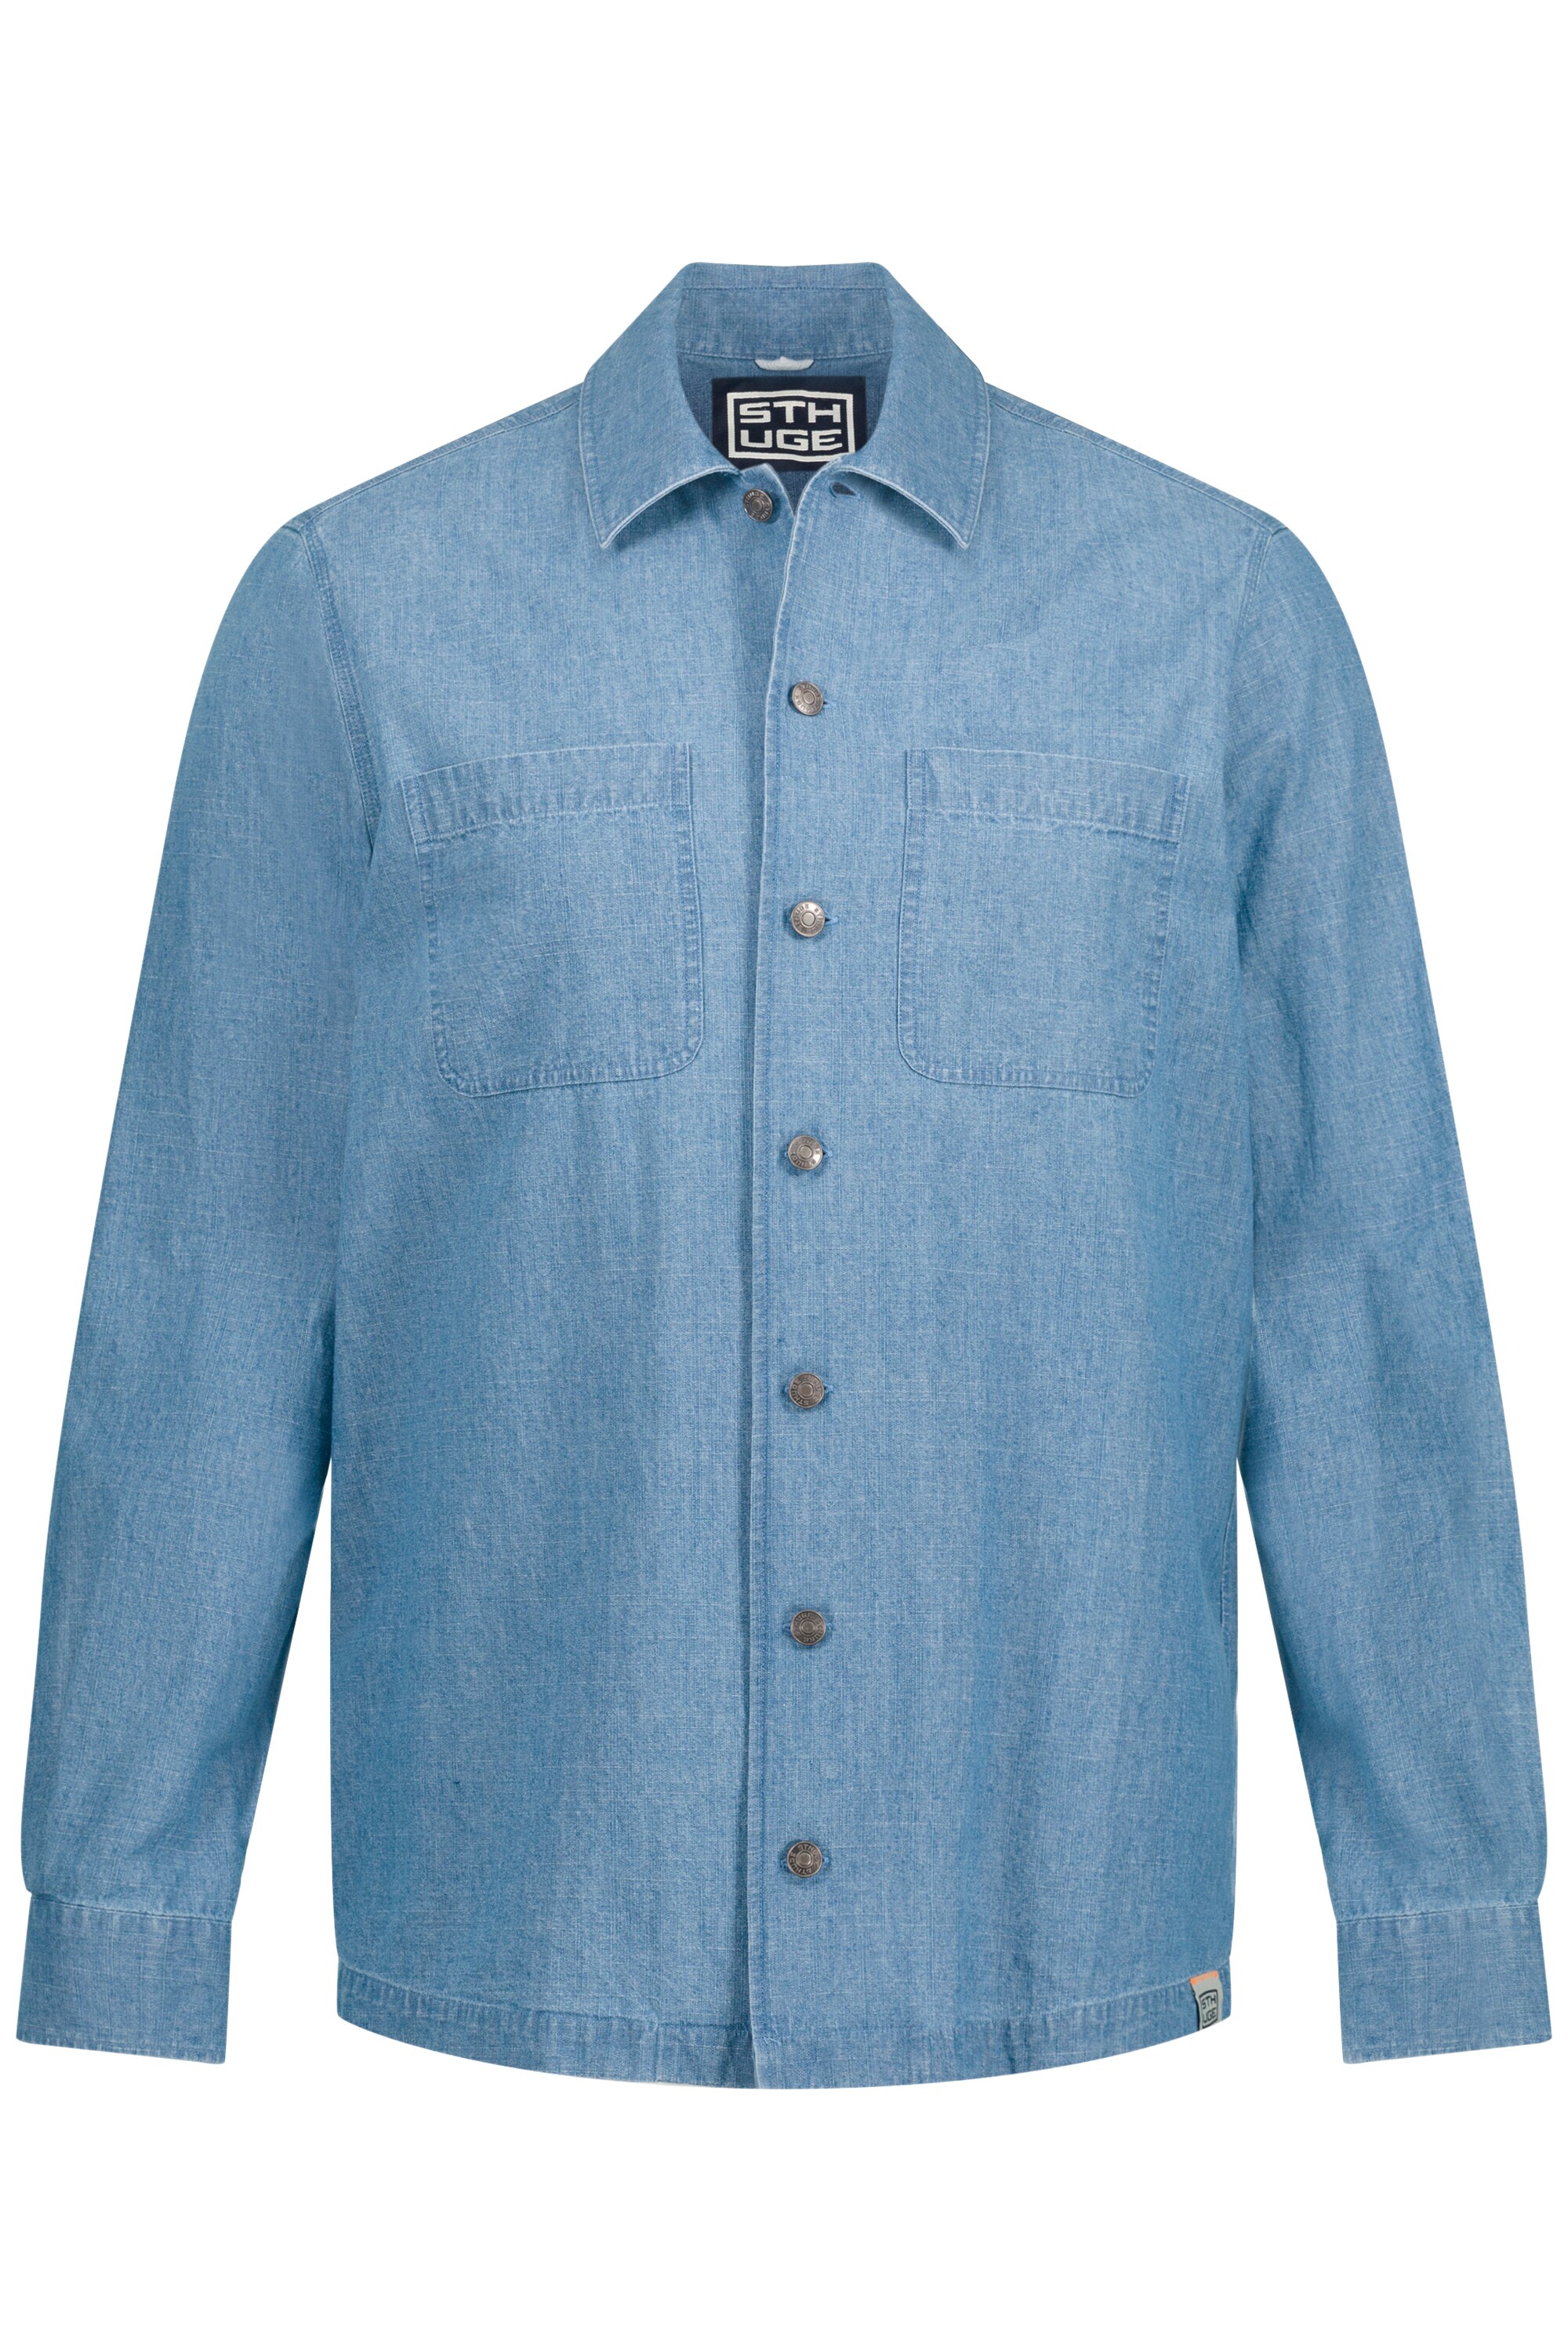 Рубашка STHUGE, цвет light blue